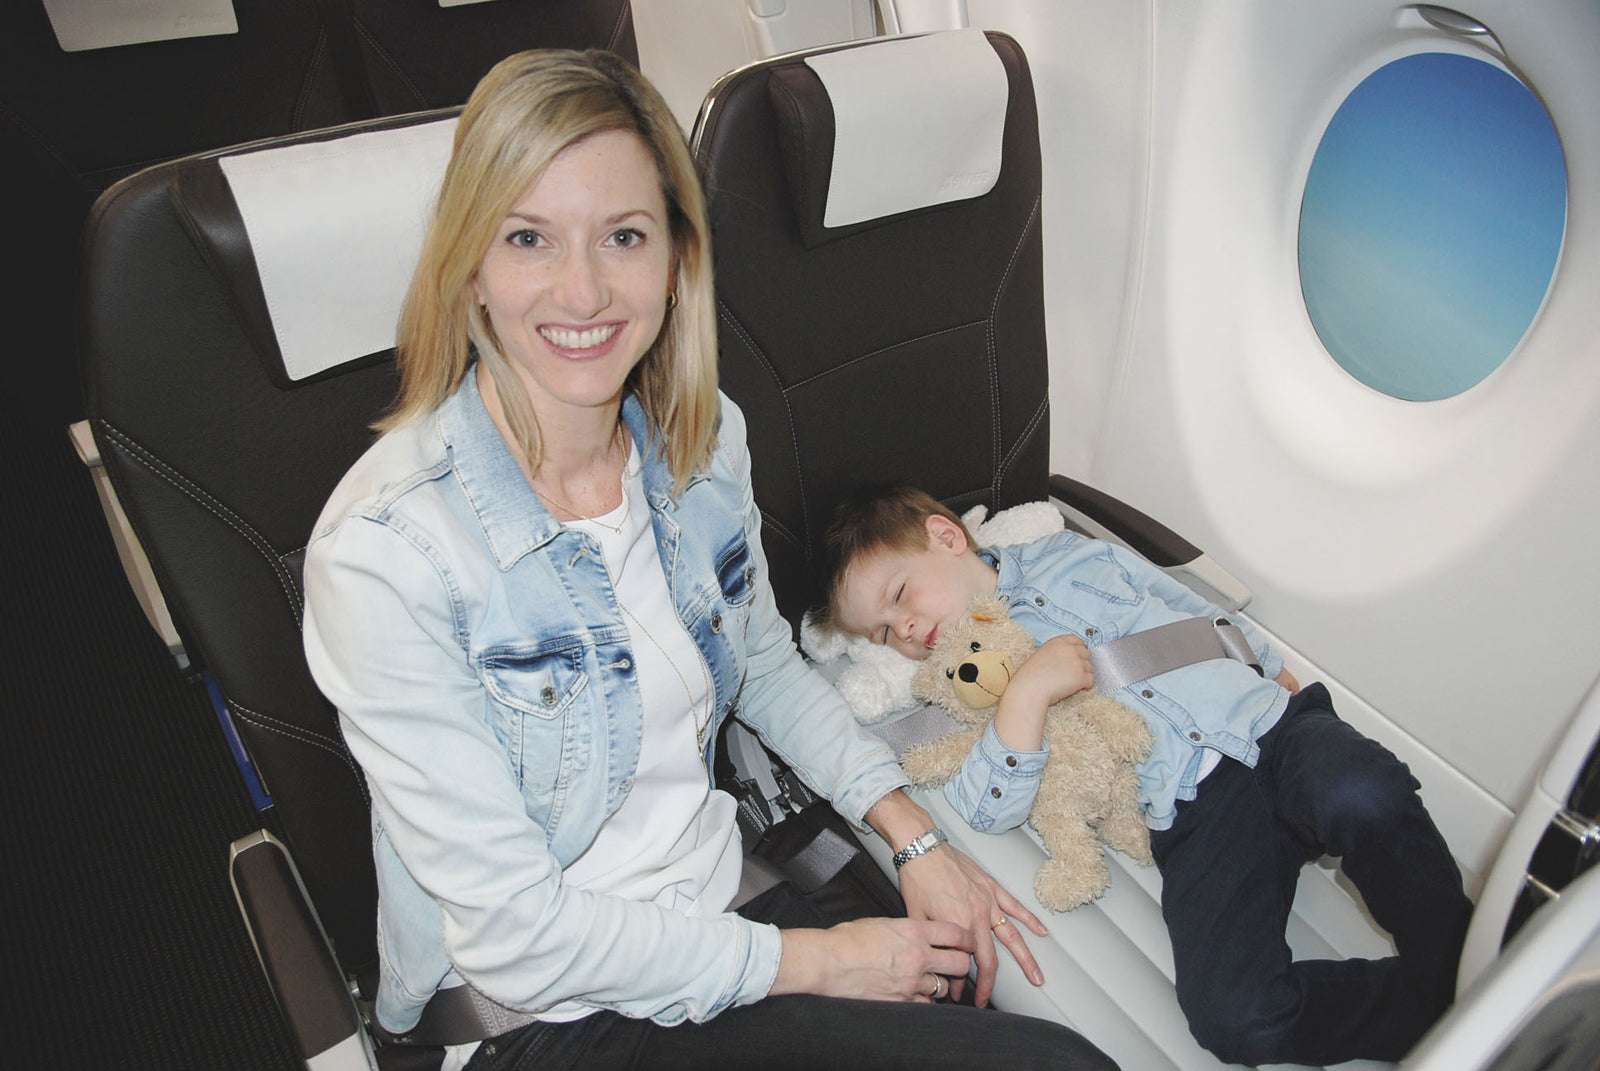 FLYAWAY KIDS BED: Parents LOVE this airline approved travel accessory for  children! - Flyaway Designs